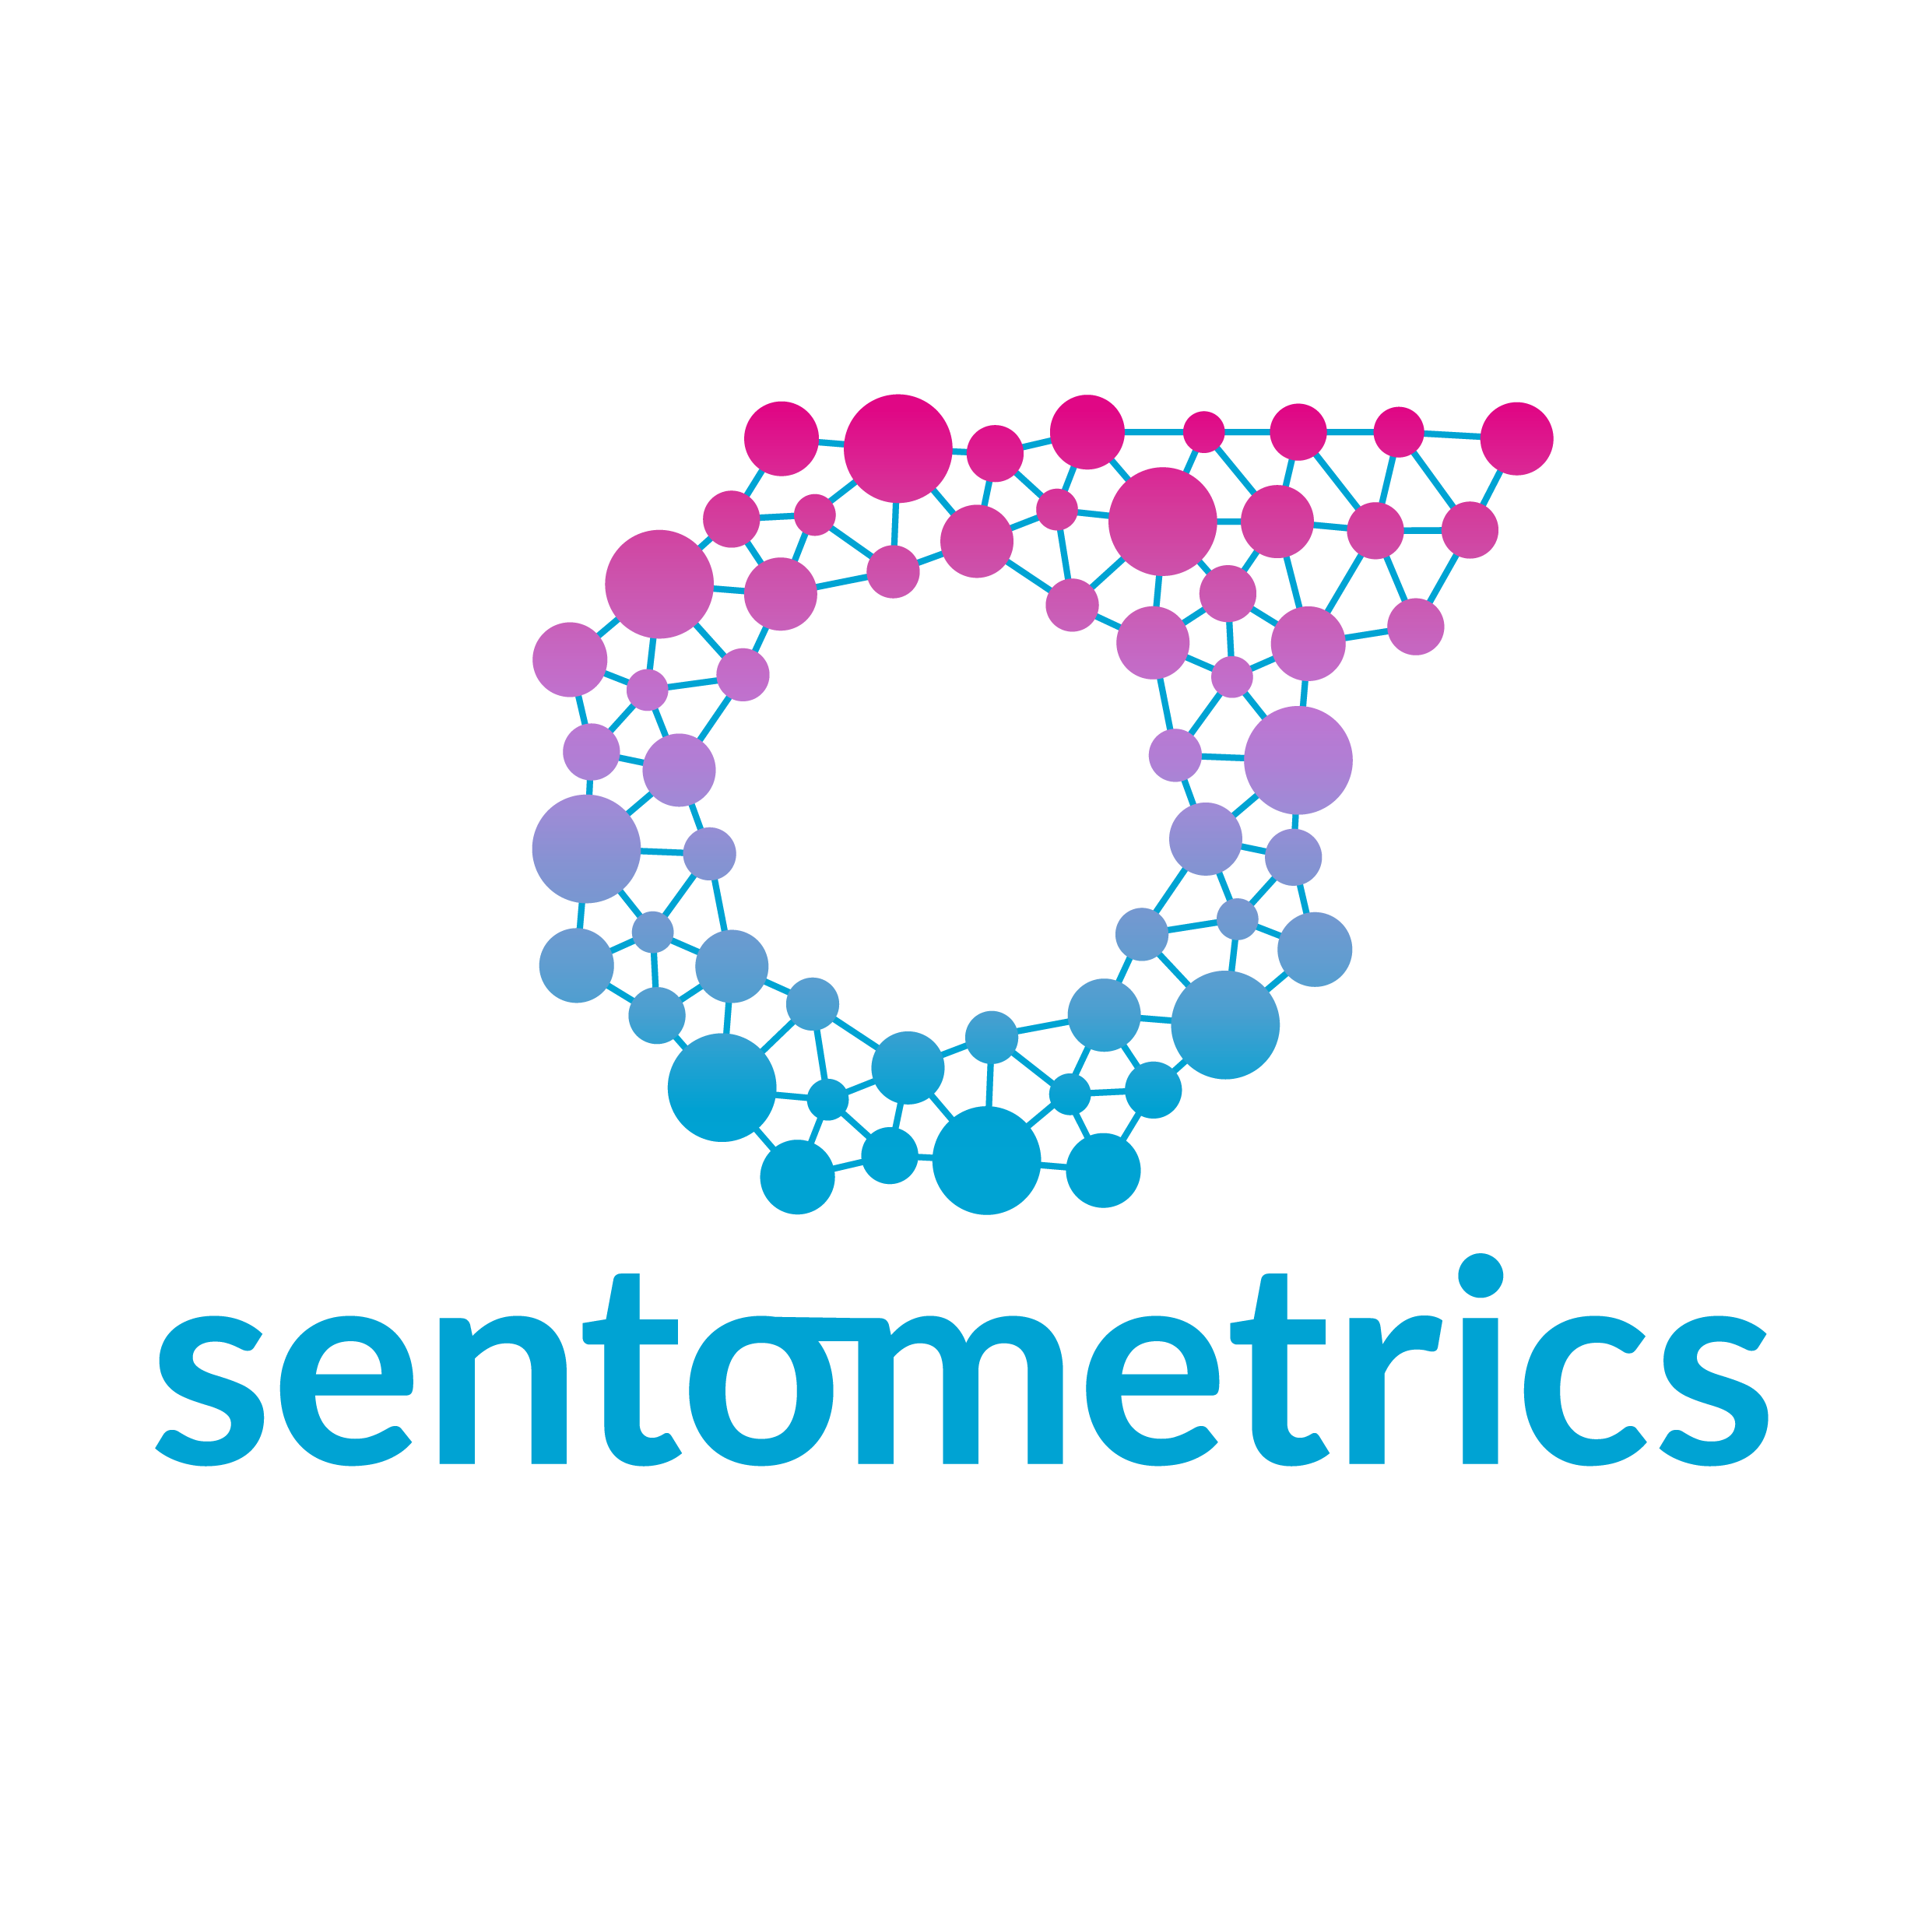 Sentometrics